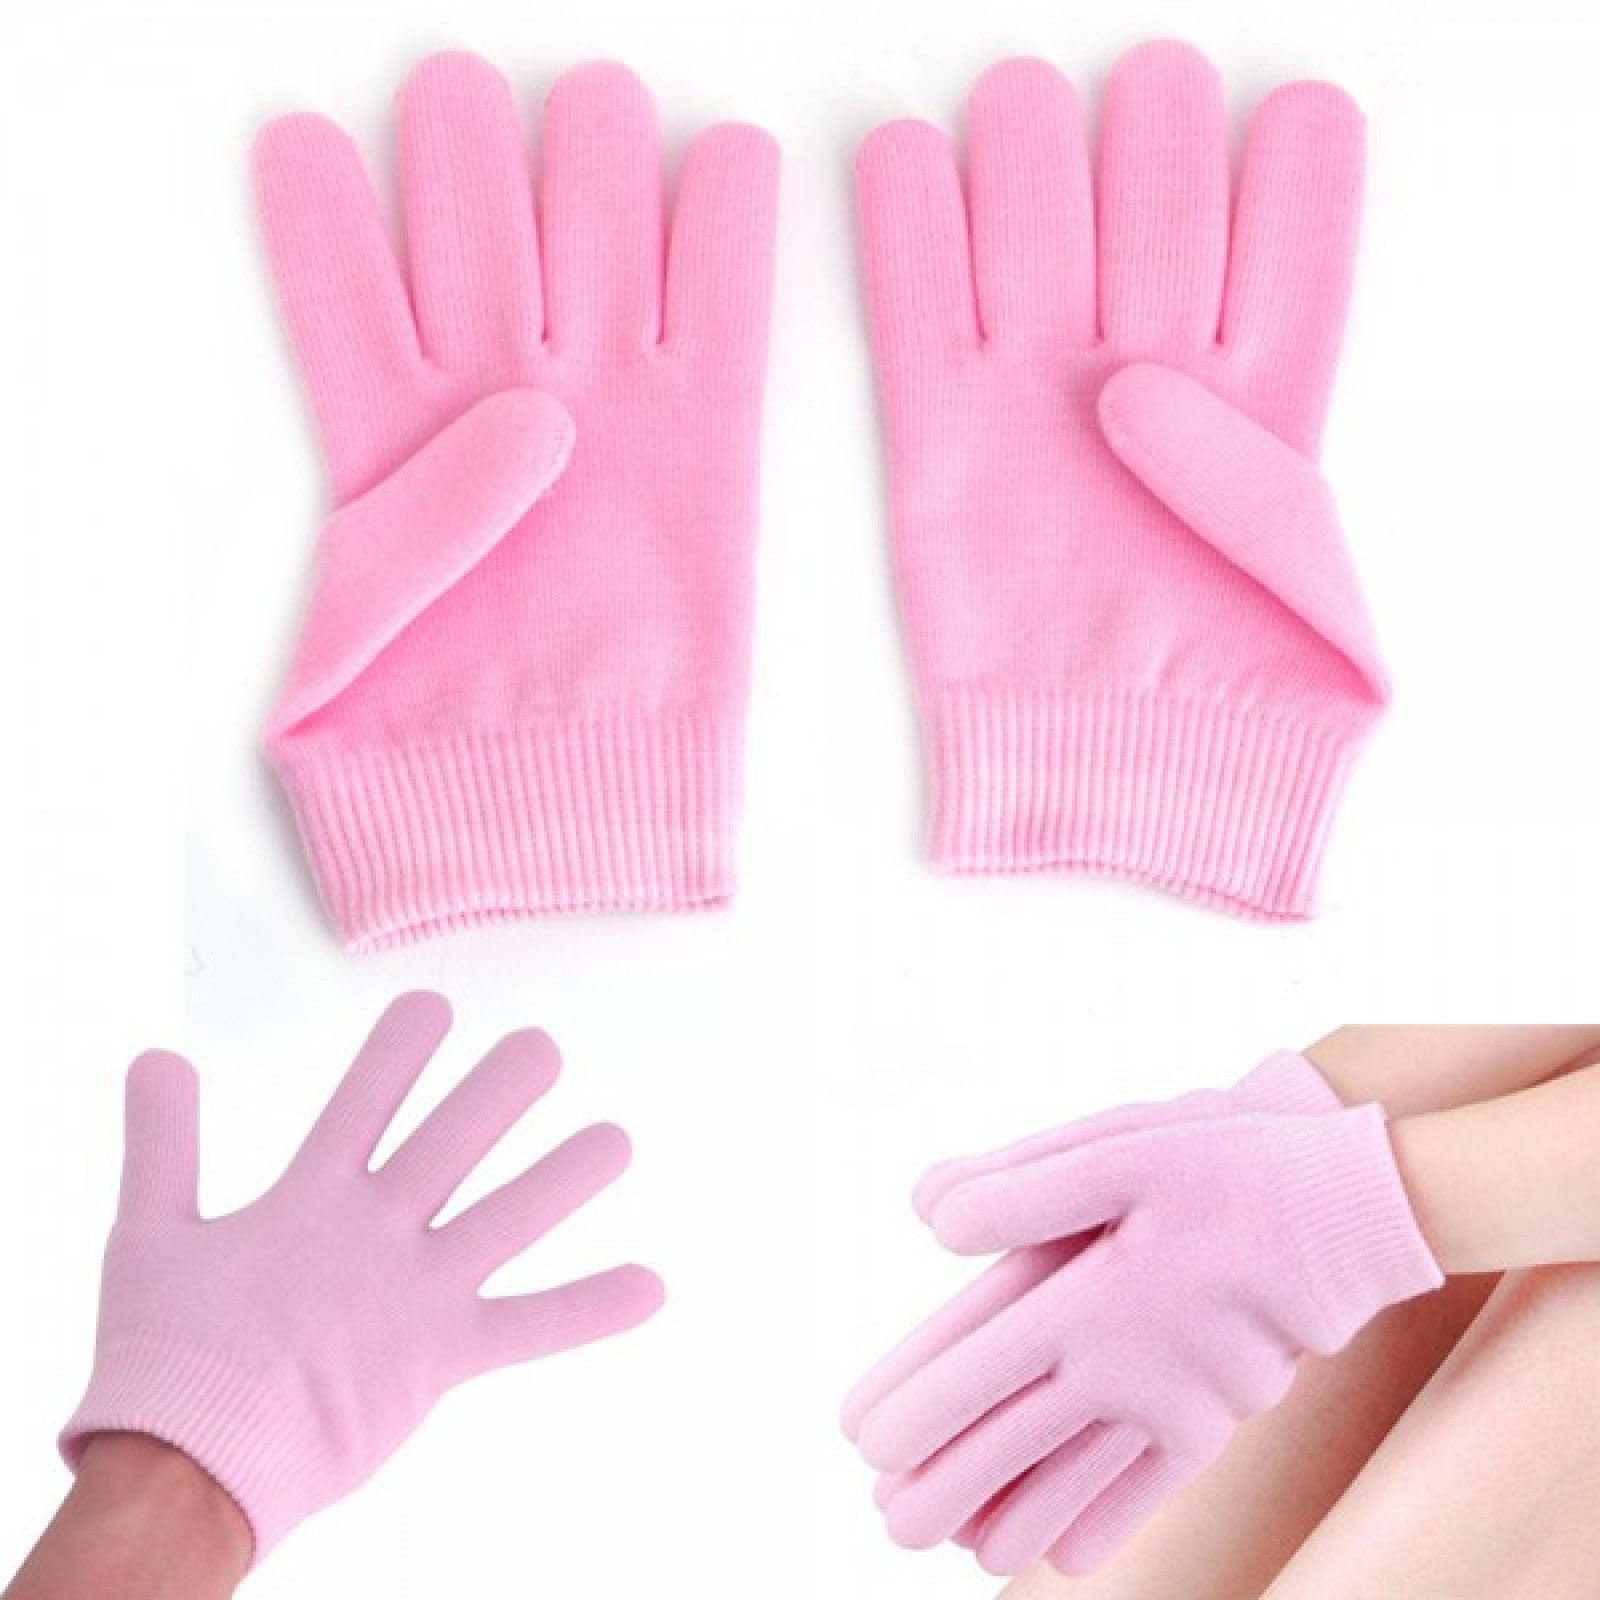 Перчатки Spa Gel Gloves 201371